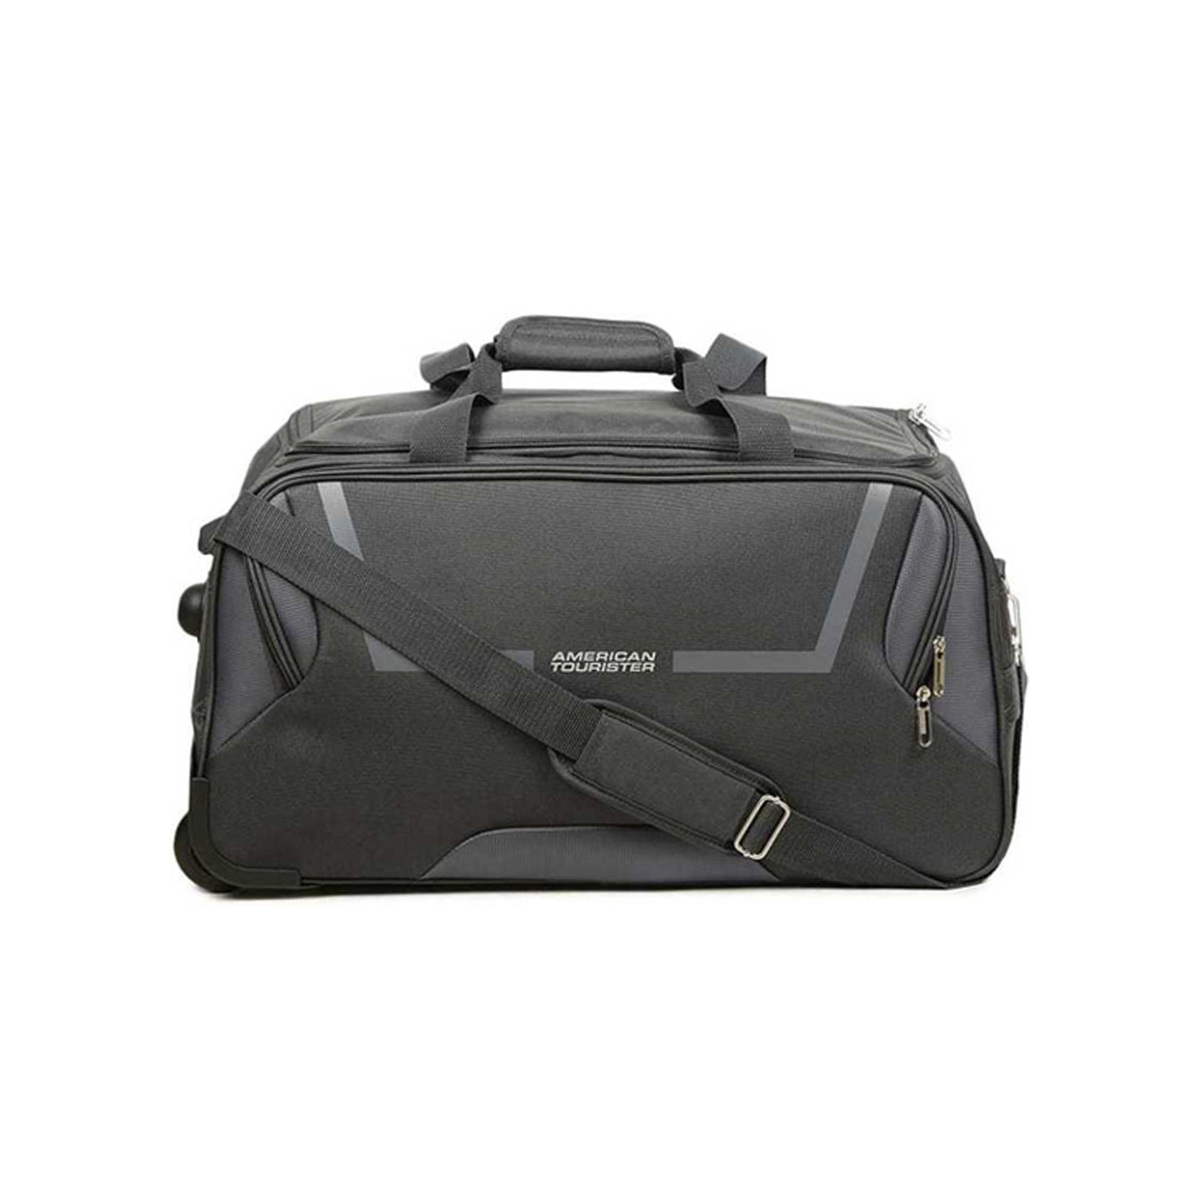 American Tourister Cosmo Duffle Bag, 67 cm, Grey